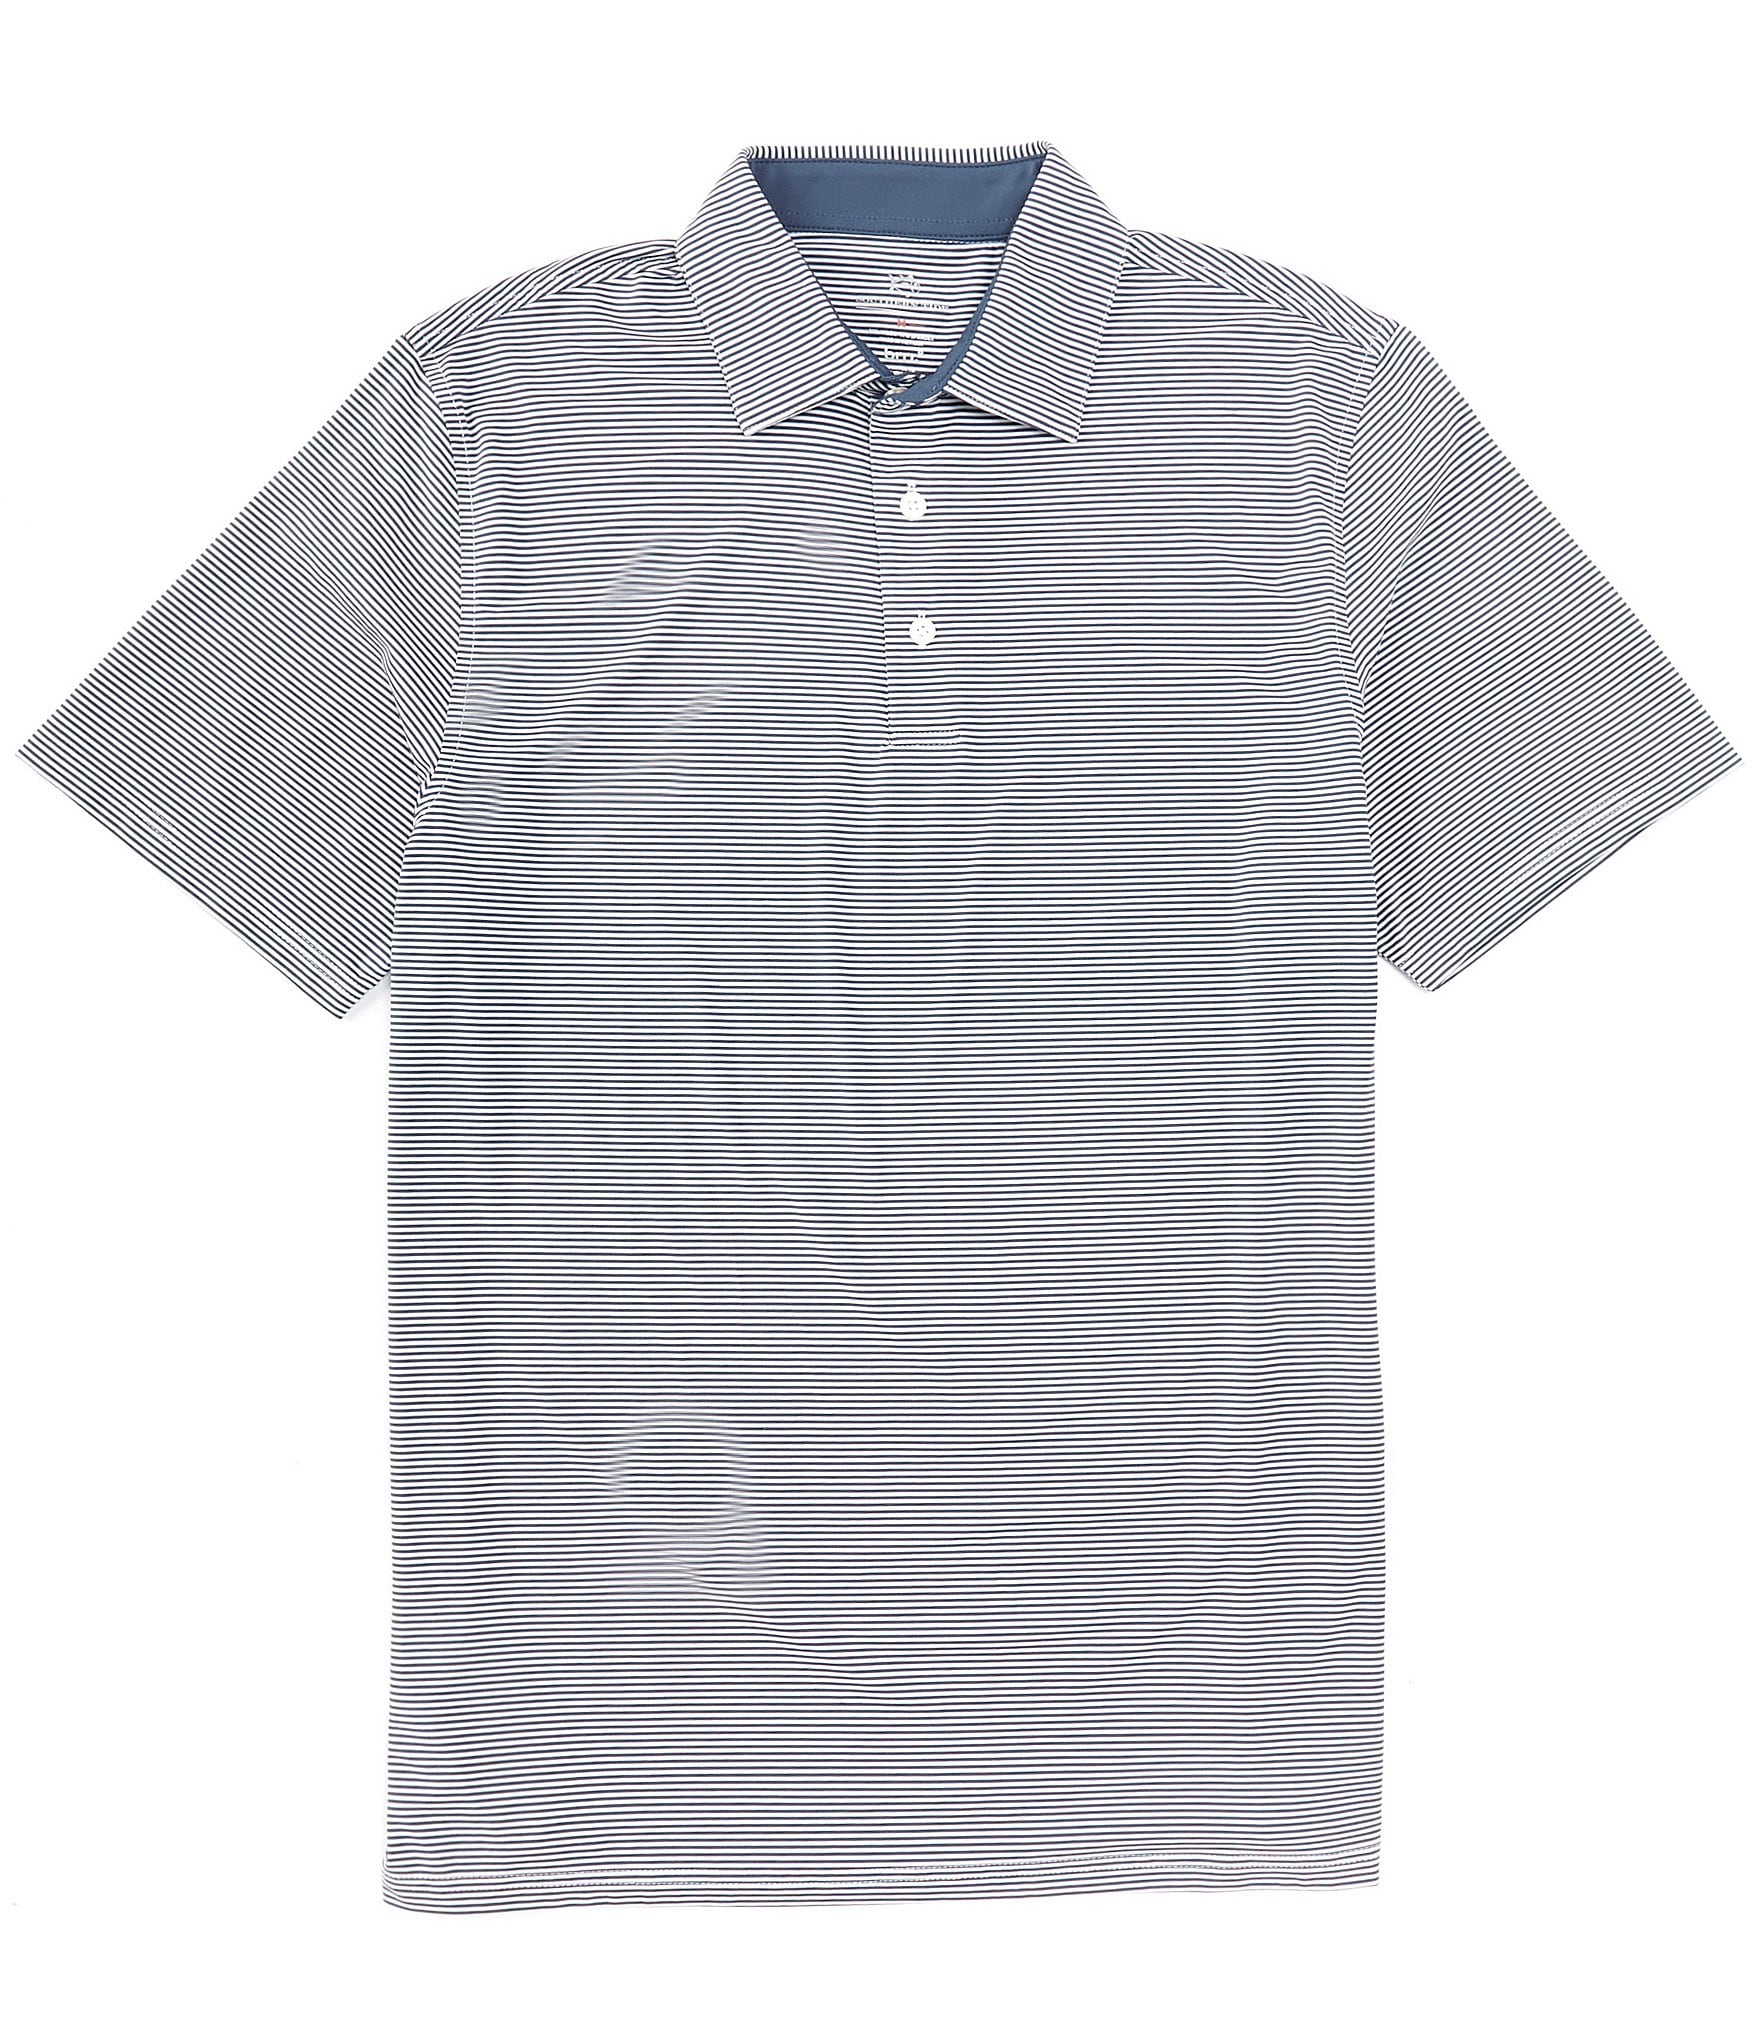 Southern Tide Performance Stretch Brrr°-eeze Meadowbrook Stripe Short Sleeve  Polo Shirt